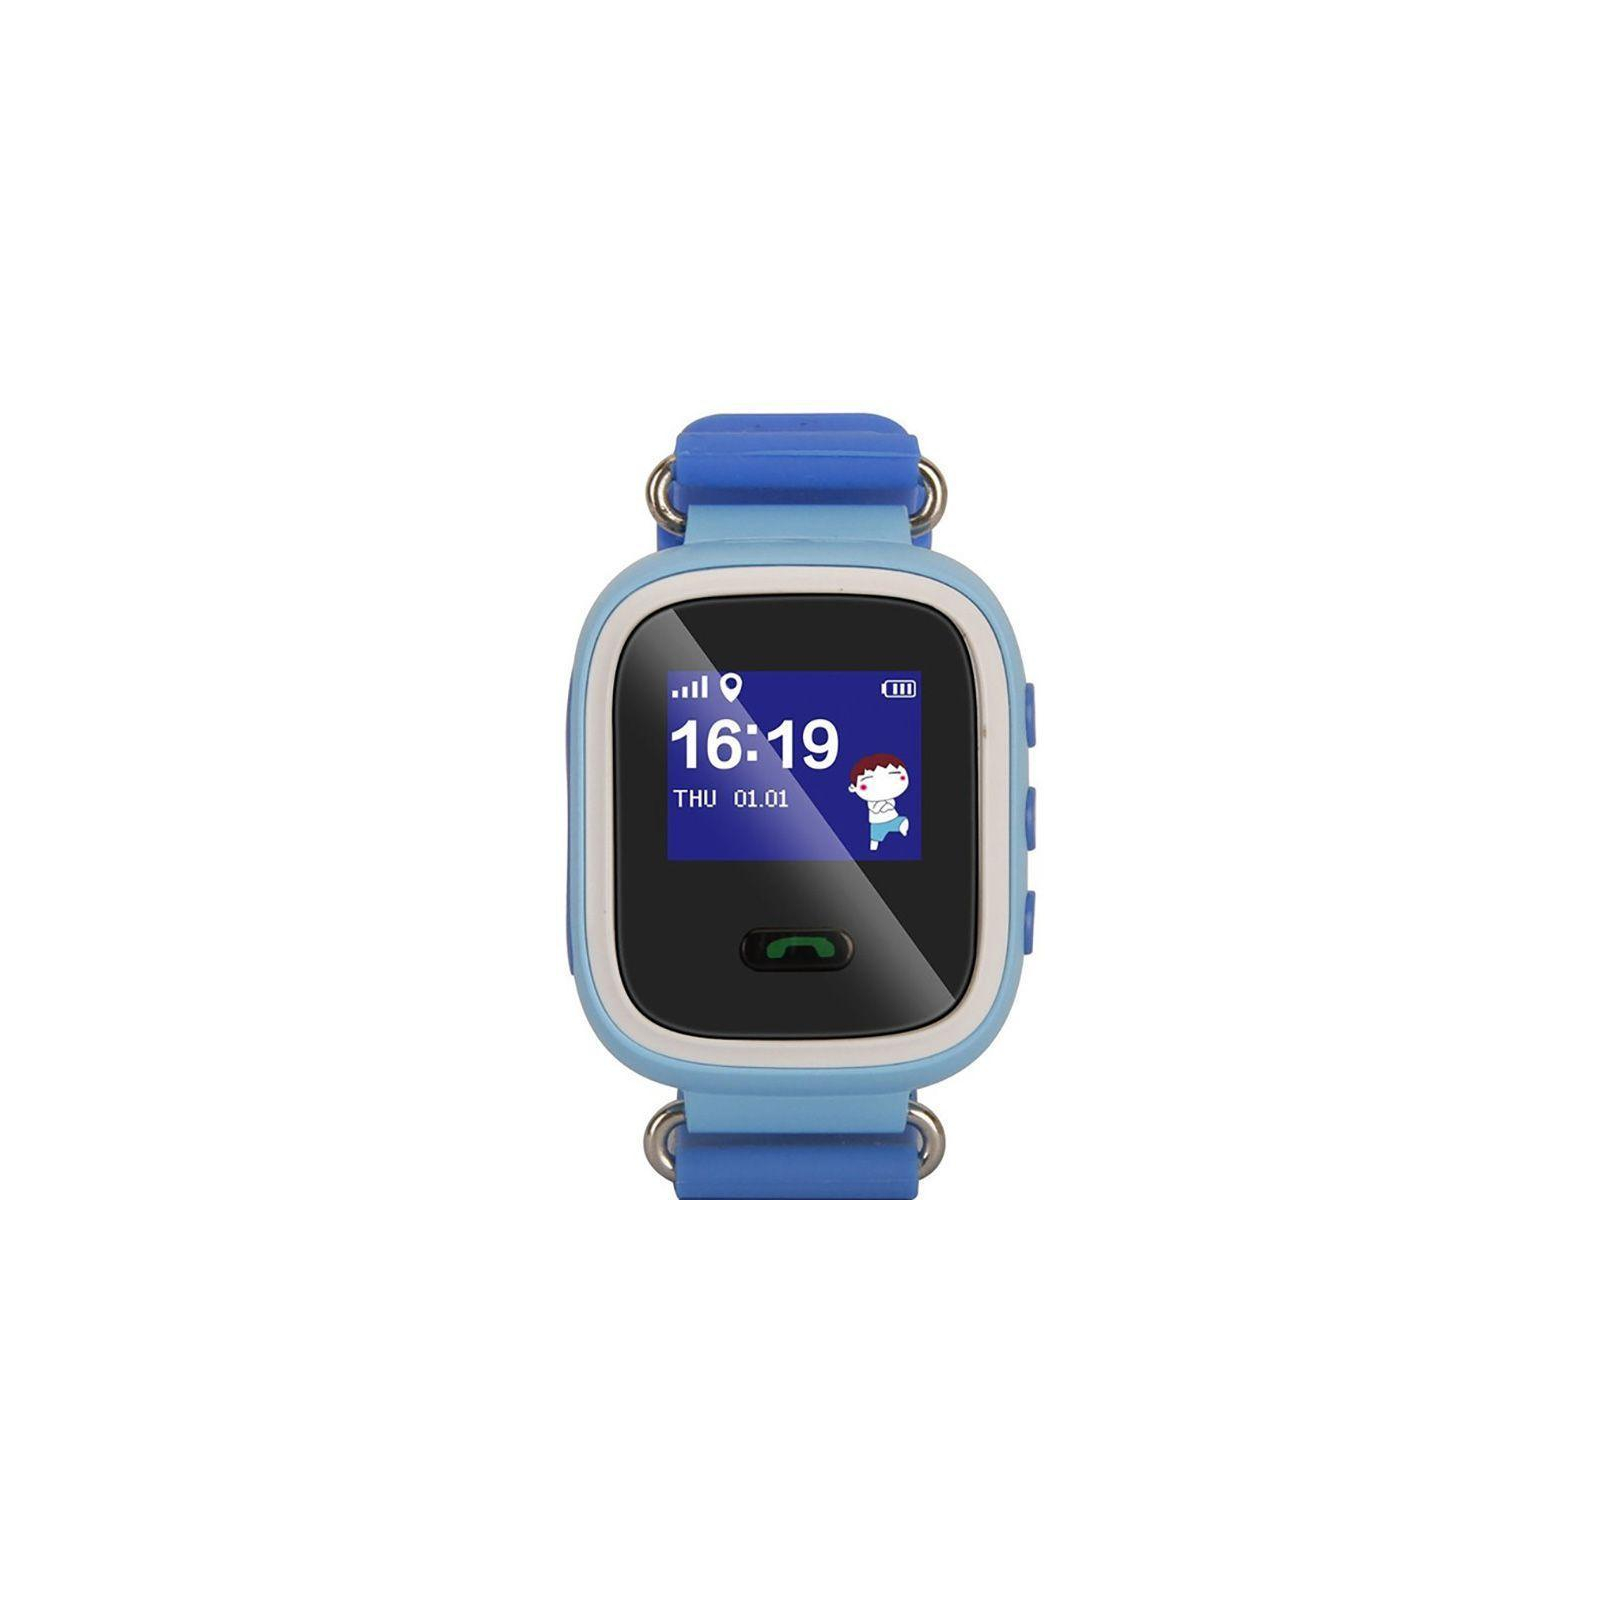 Смарт-часы UWatch Q60 Kid smart watch Pink (F_50520) изображение 2